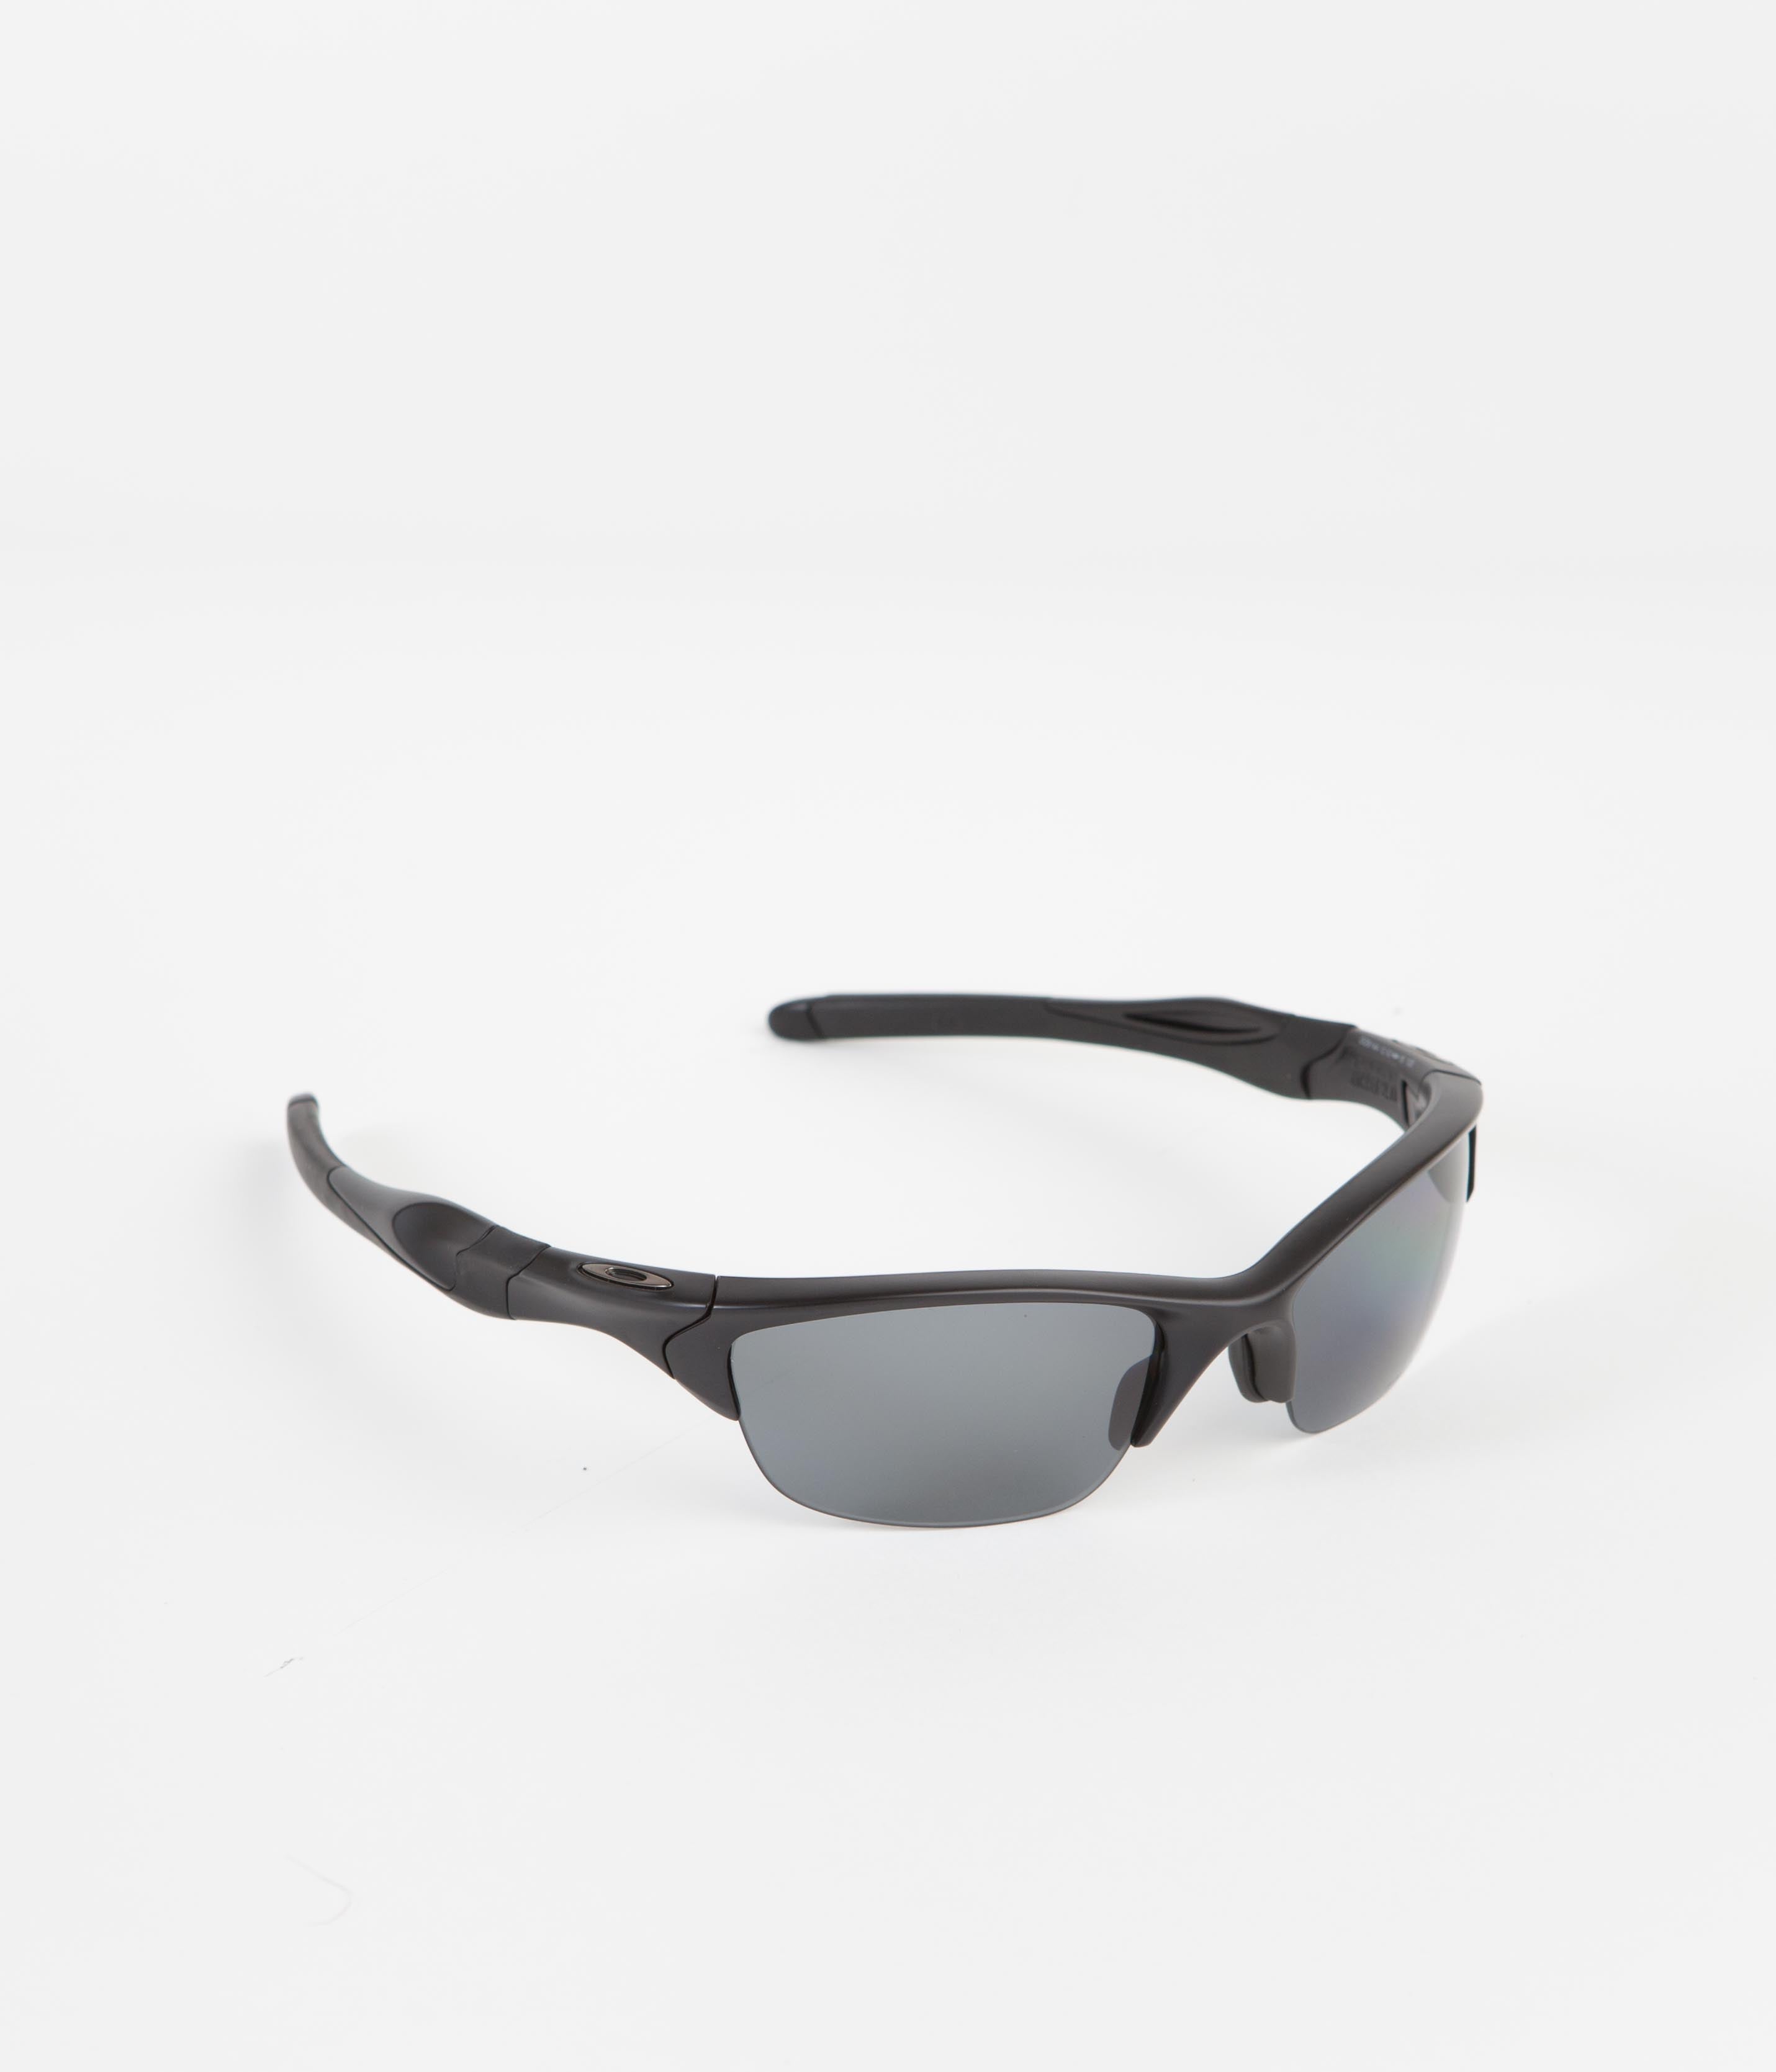 FitforhealthShops | Fendi Fendi Ff 0430 s Brown Havana Sunglasses - Ban  Square Frame Sunglasses Inactive - Favourites Ray - Oakley Standard Issue Half  Jacket  Sunglasses